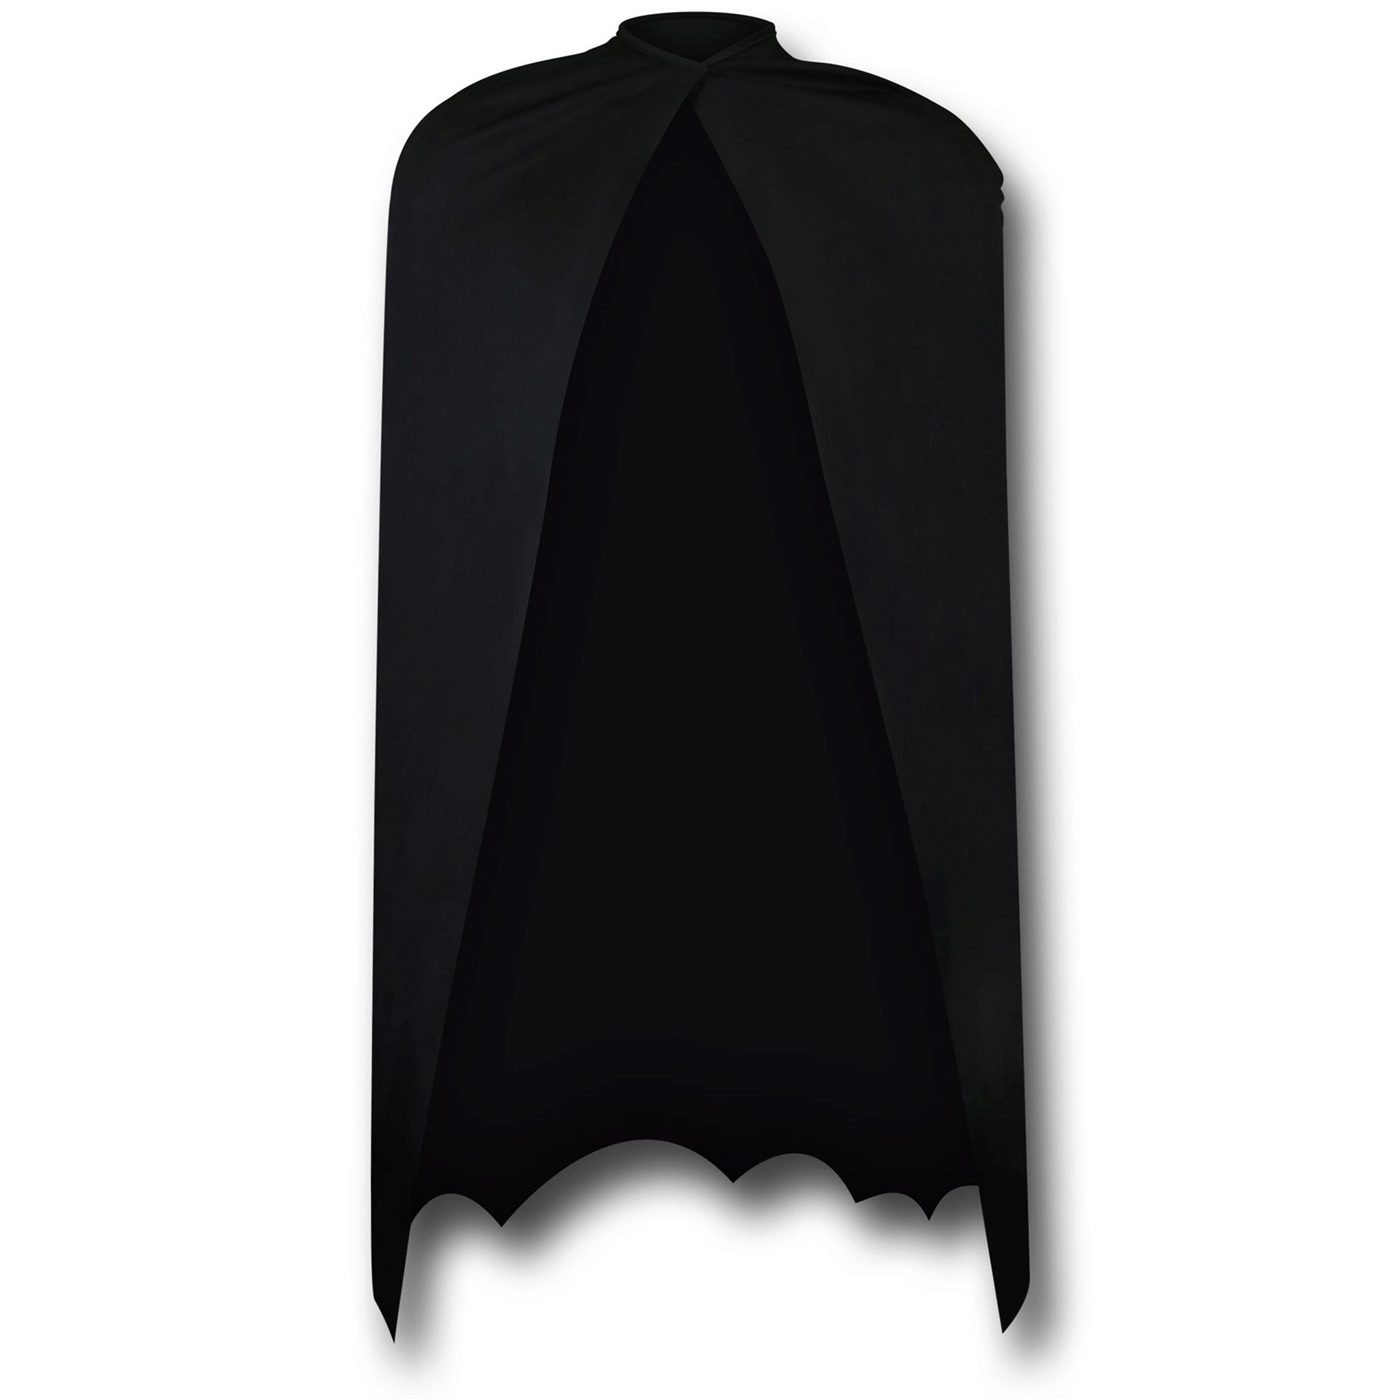 Batman Adult Mask & Cape Set